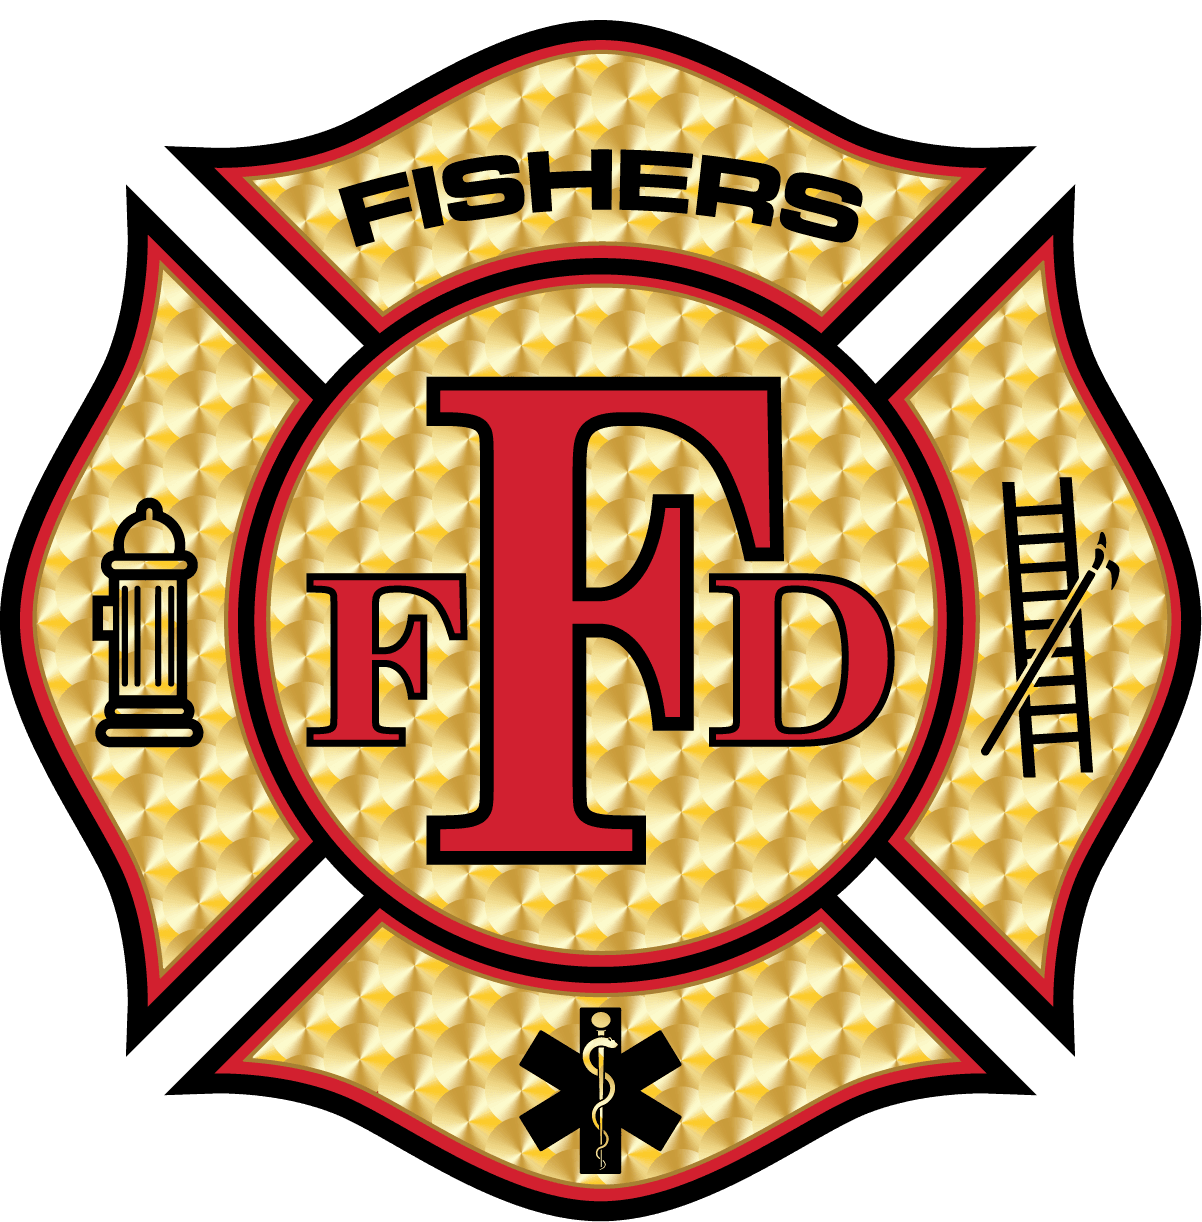 Firemen Logo - Fishers Fire Department | Fishers, IN - Official Website